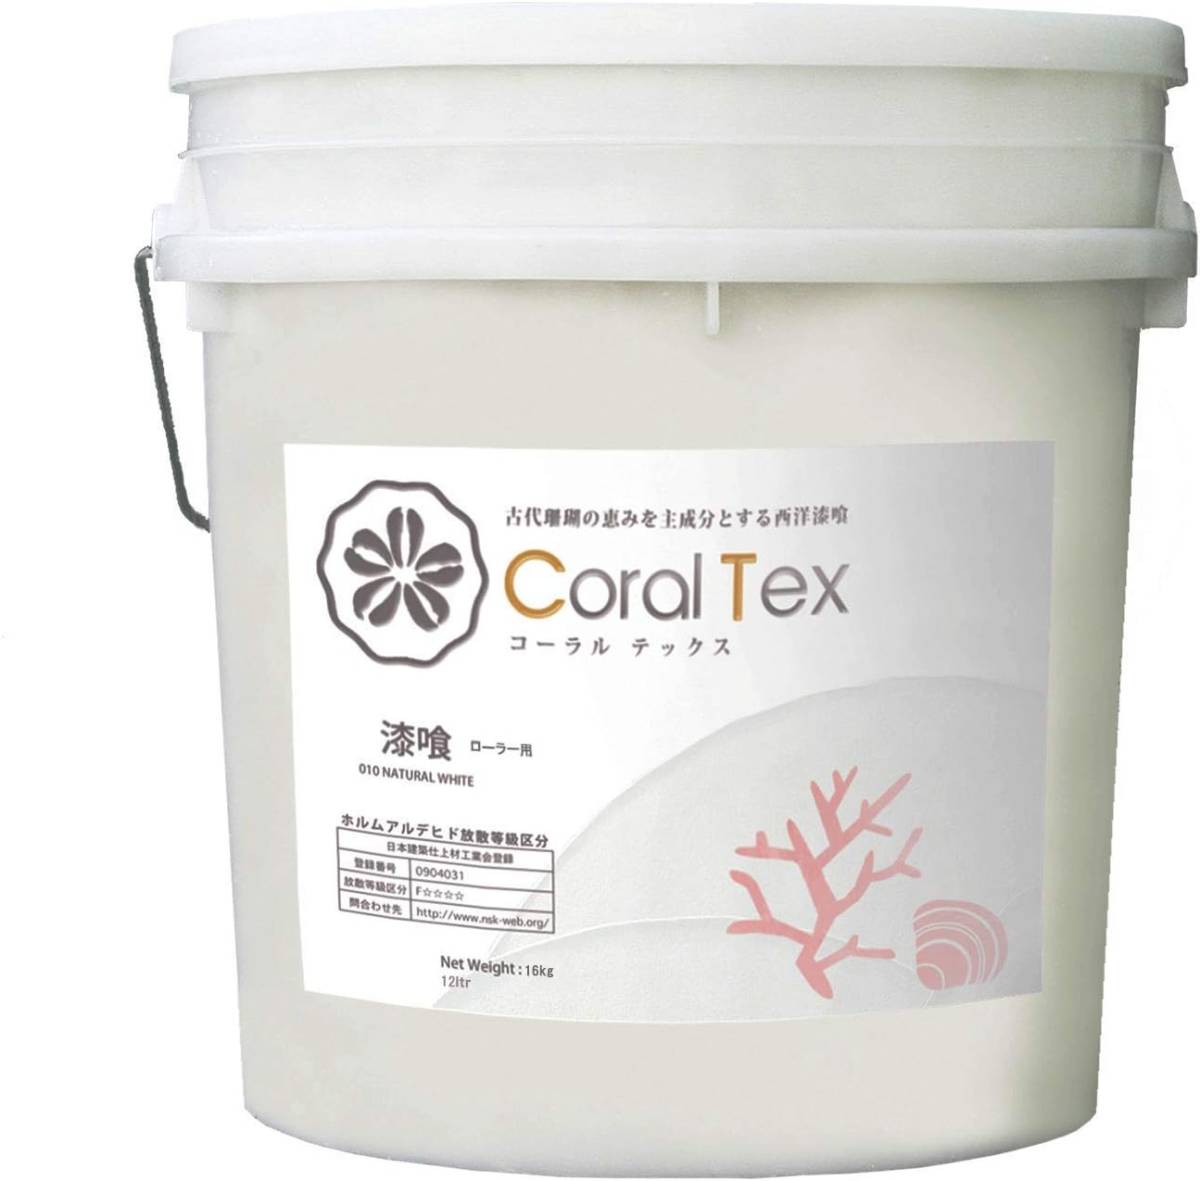 CORAL TEX】コーラルテックス ローラー用 古代珊瑚の恵みを主成分とする西洋漆喰 16kg (010 NATURAL WHITE)_画像1